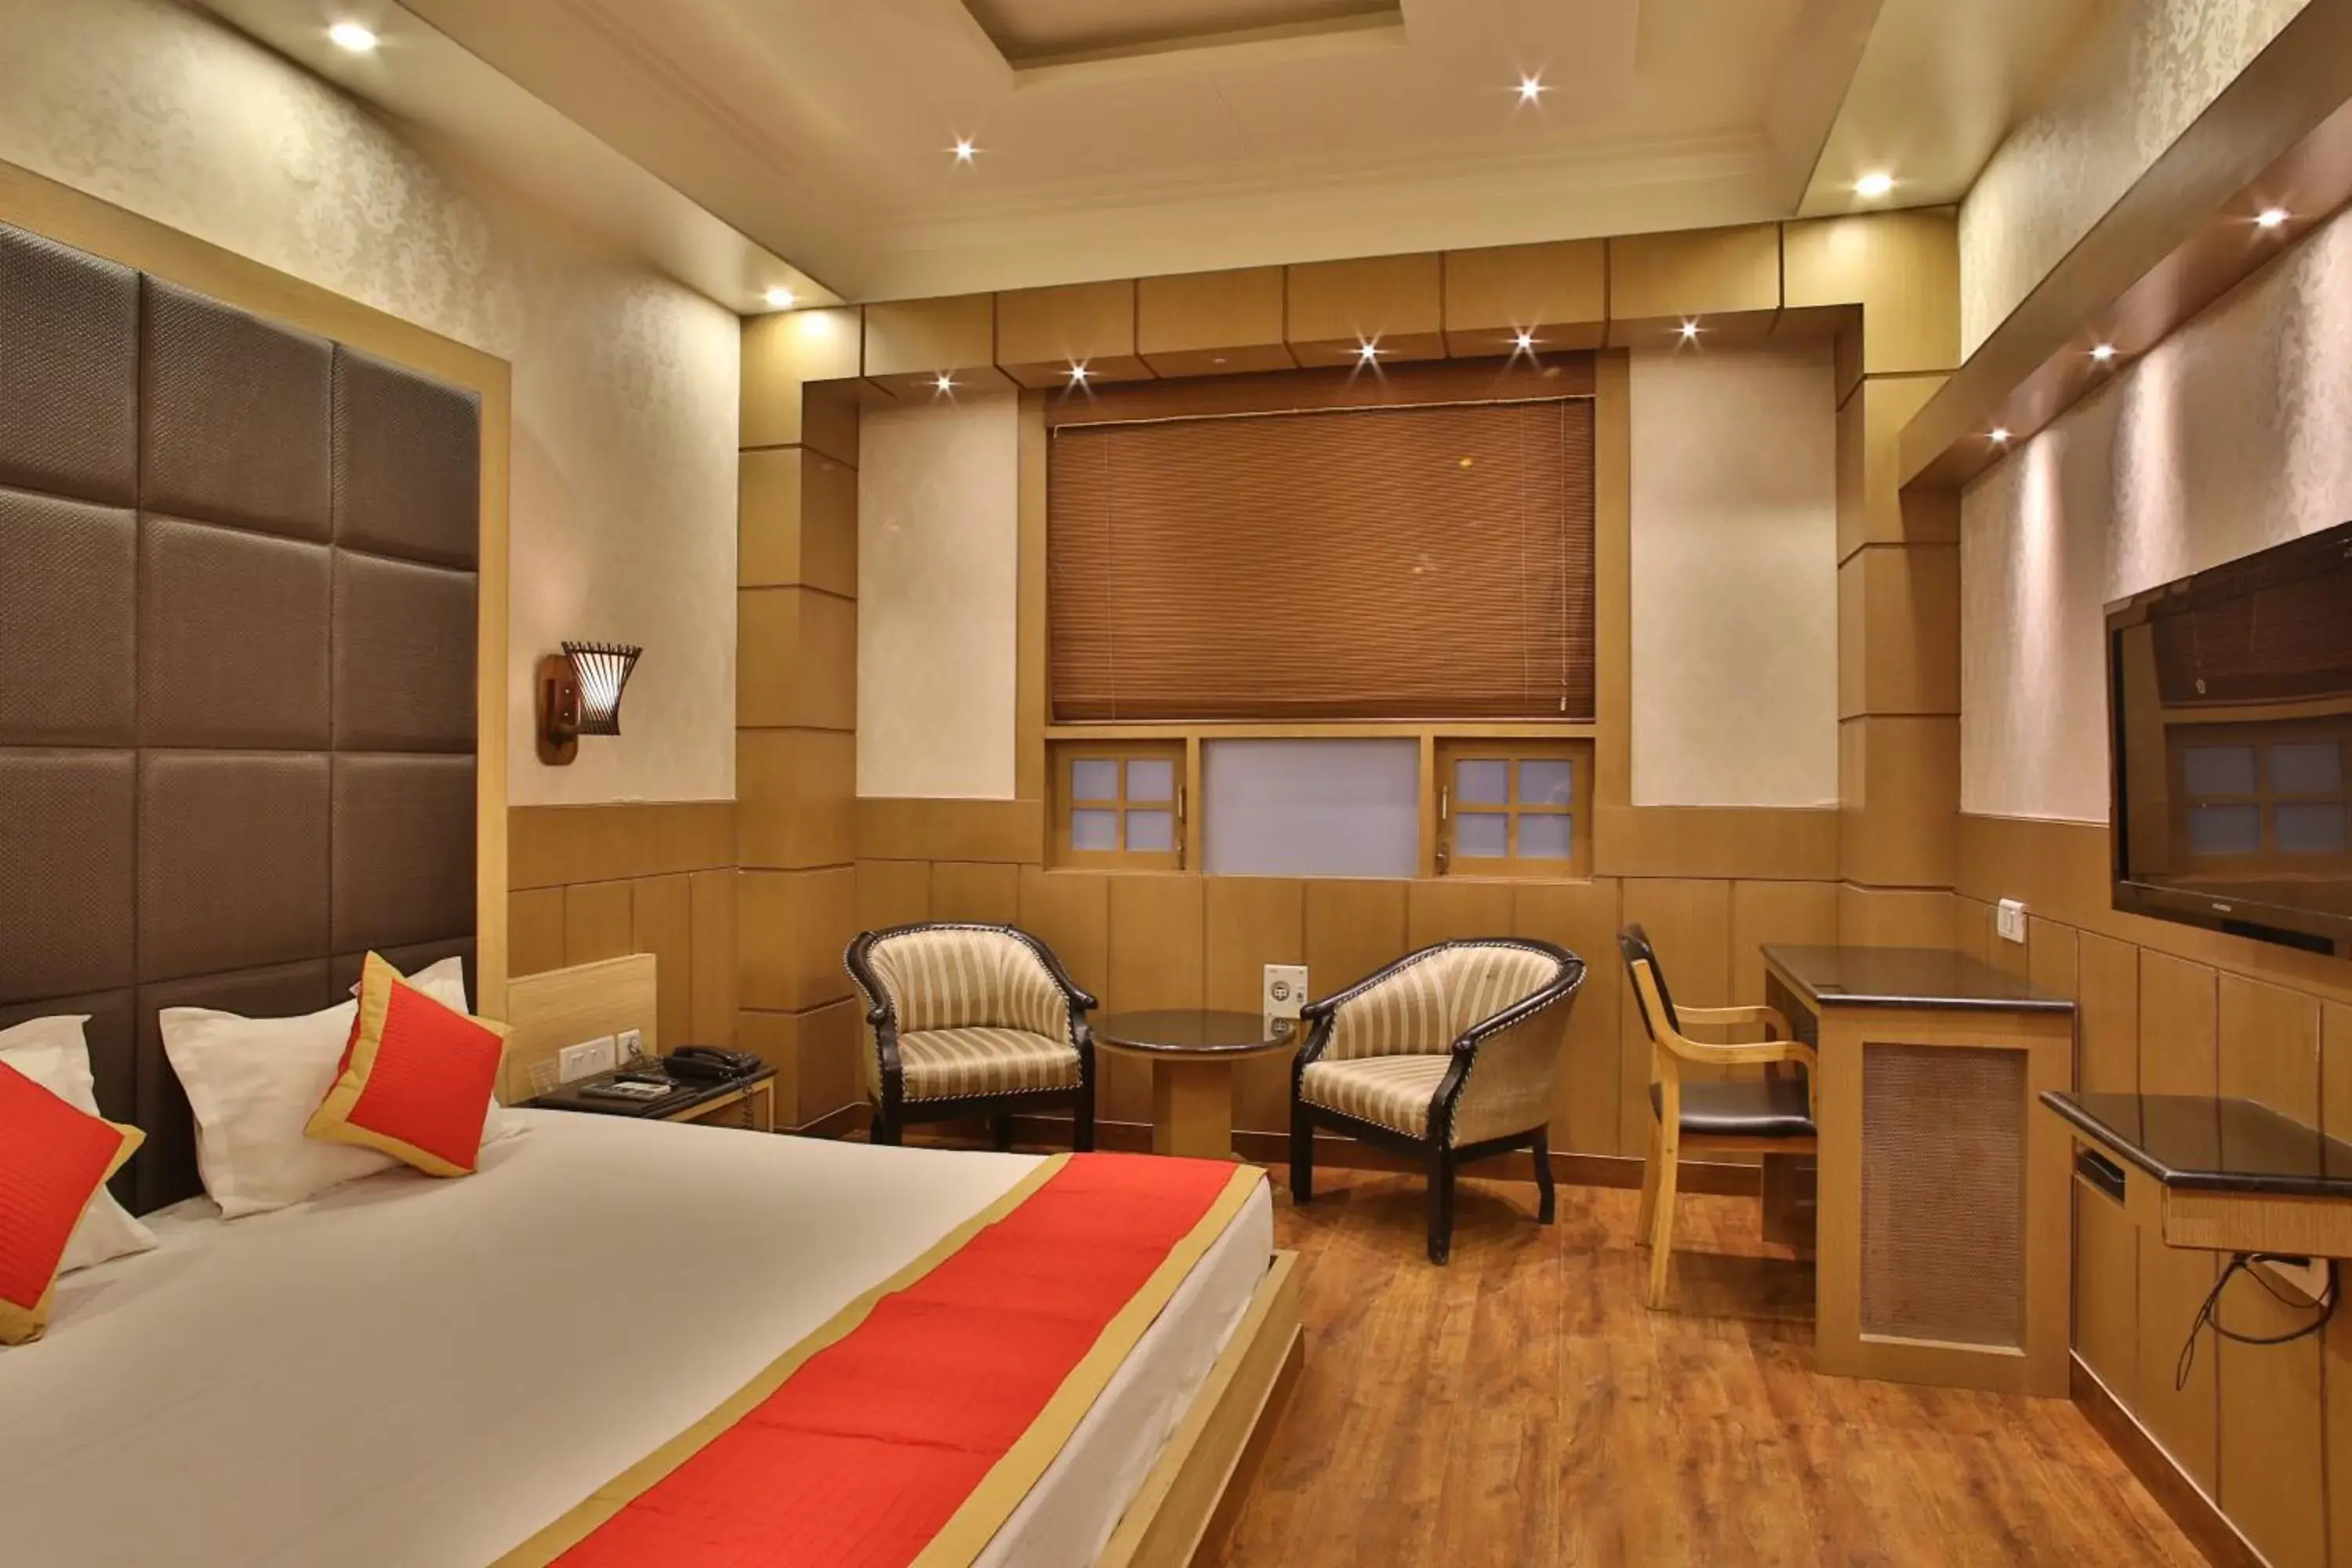 TV and multimedia, Room Photo in Hotel The Grand Chandiram